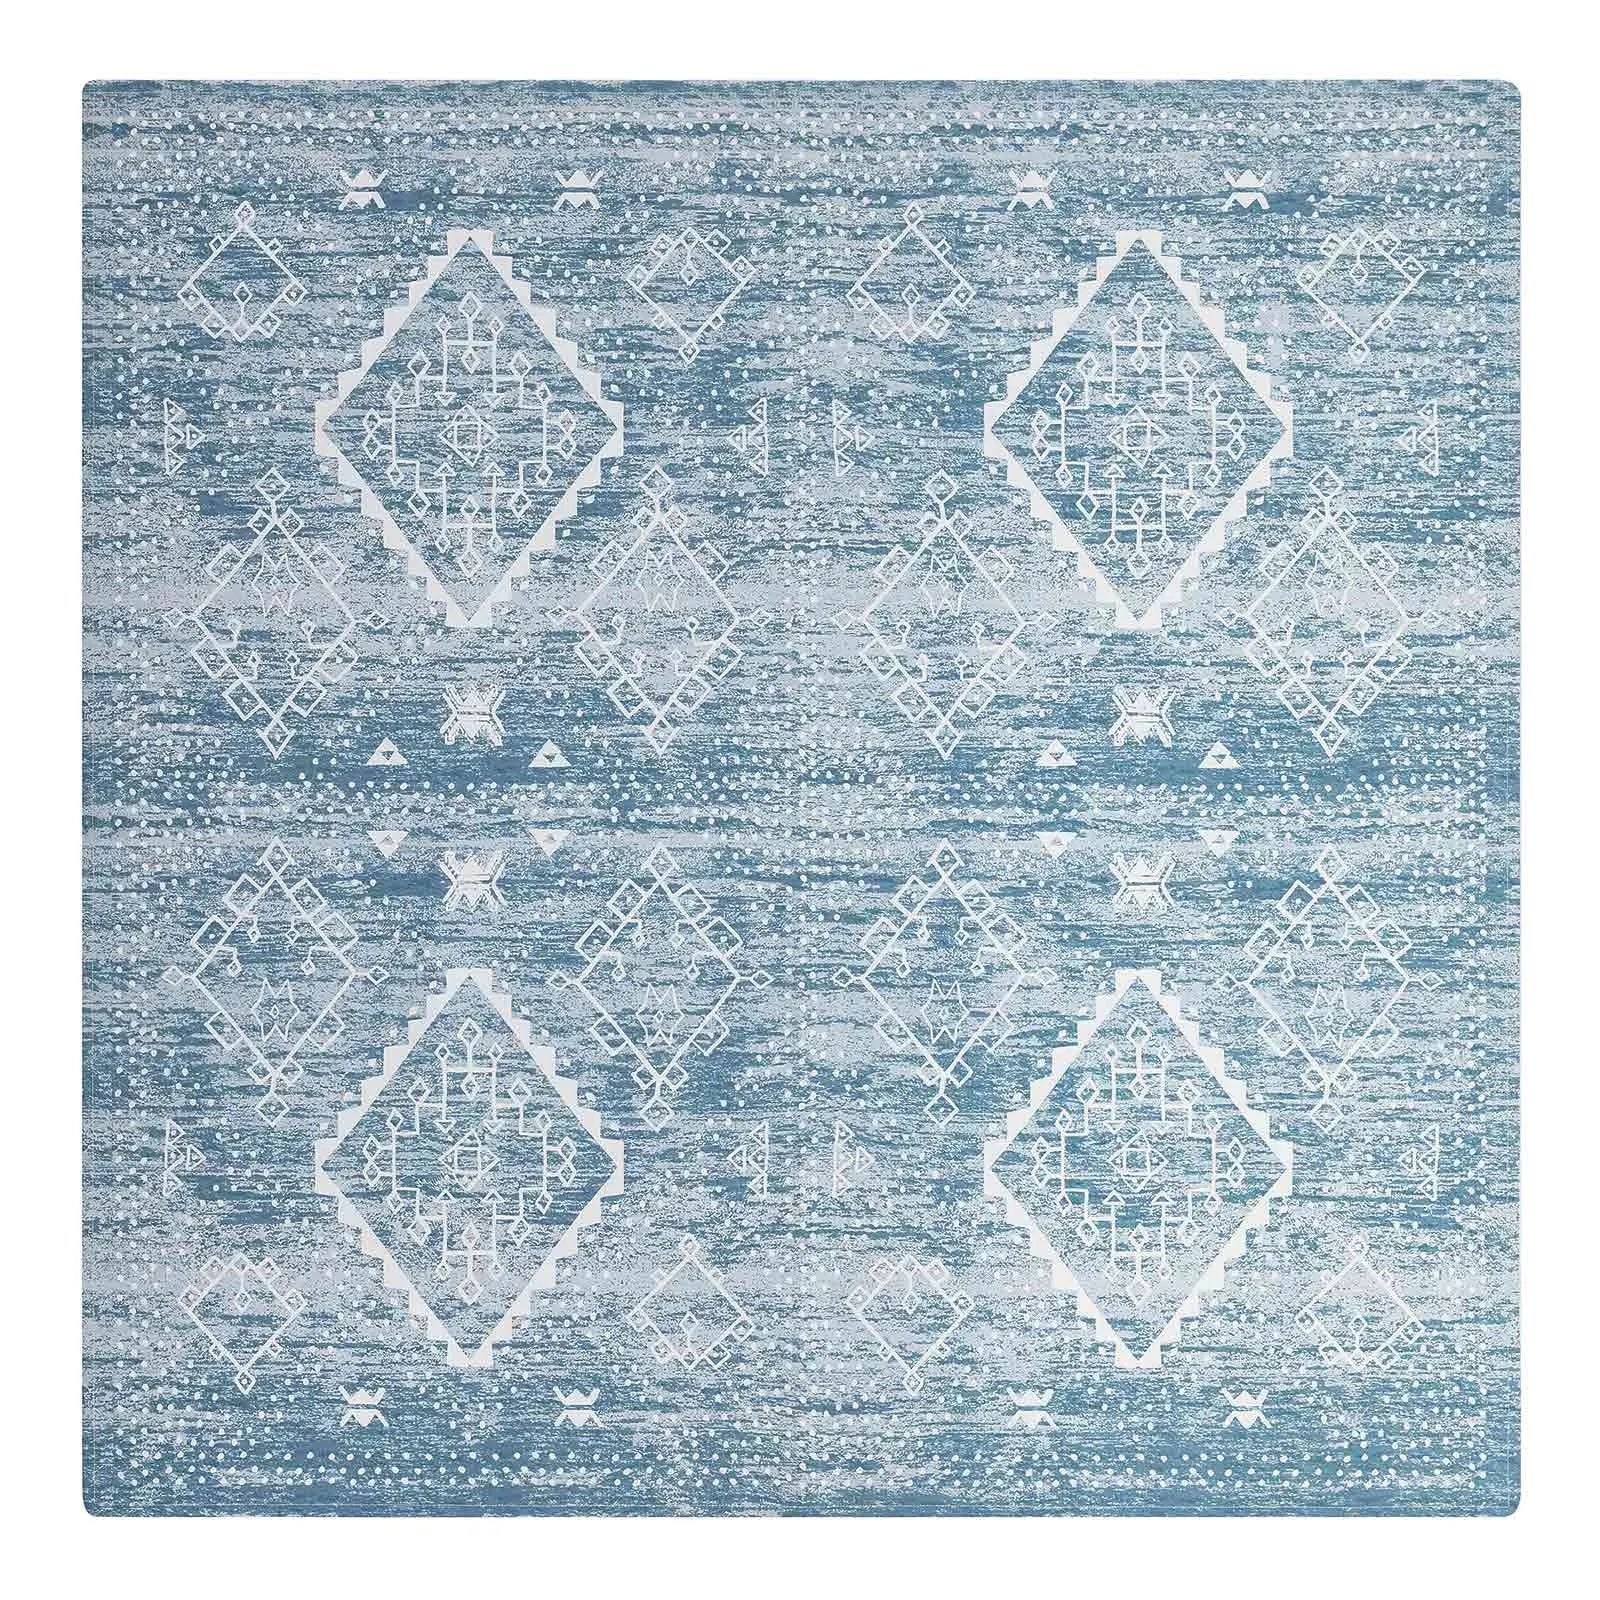 Ula indigo blue and white boho print highchair mat